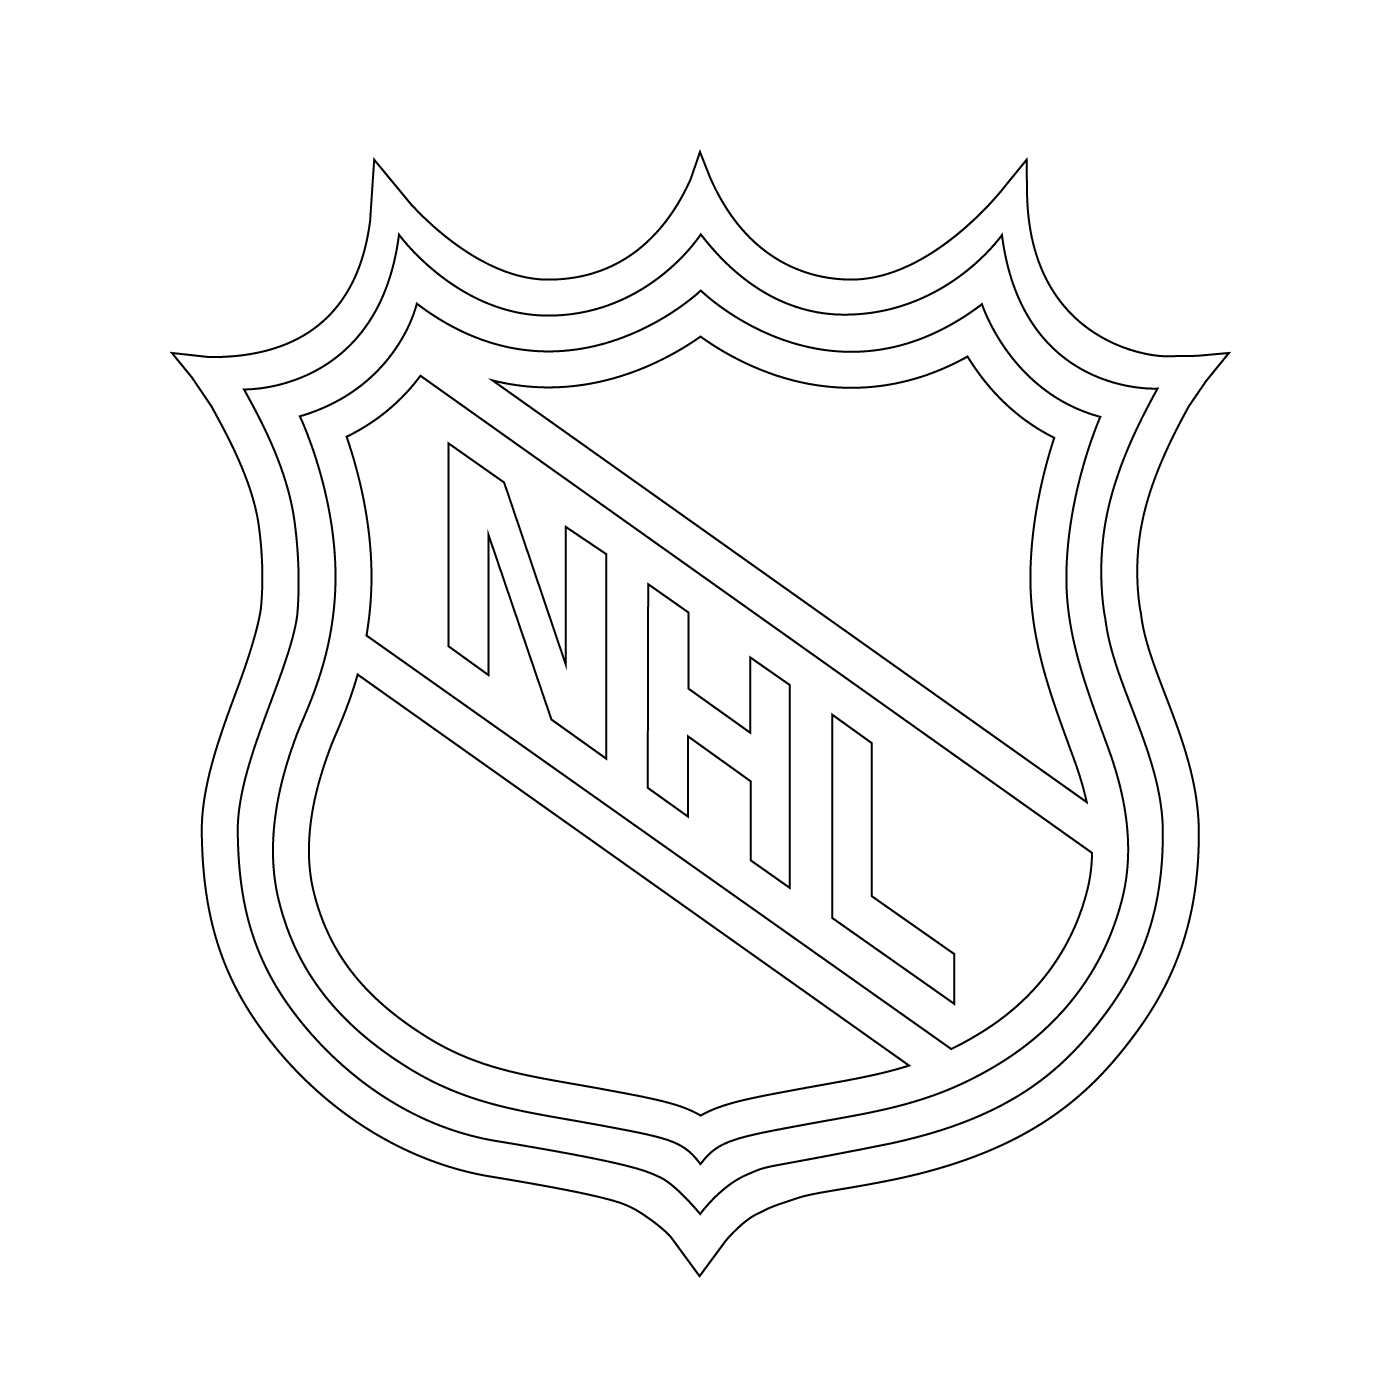  Logo NHL (National Hockey League) 